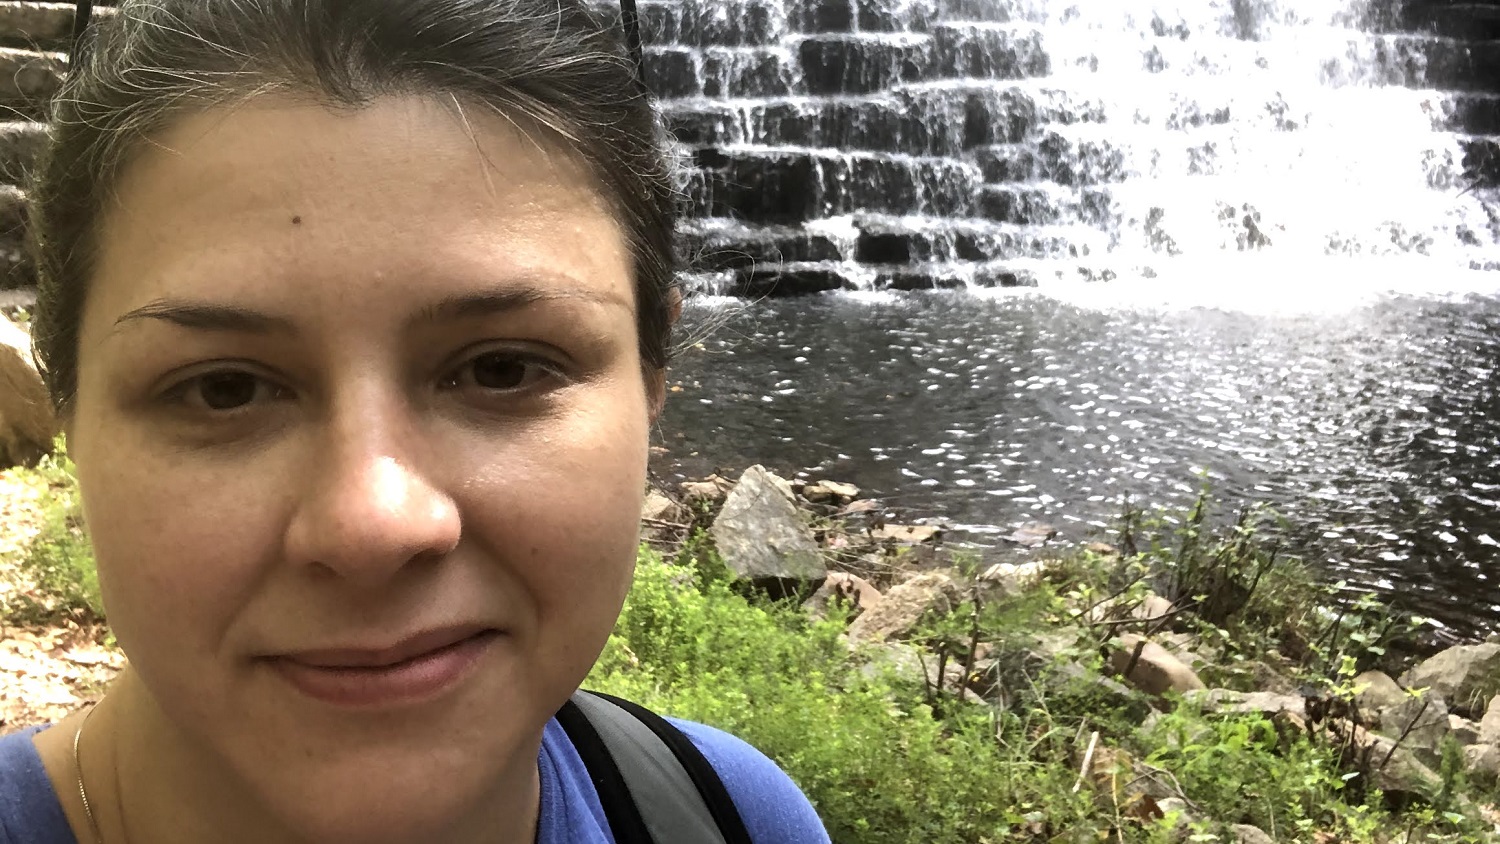 Erin Adair and Waterfall - Staff Spotlight: Meet Erin Adair - Parks, Recreation and Tourism Management at NC State University